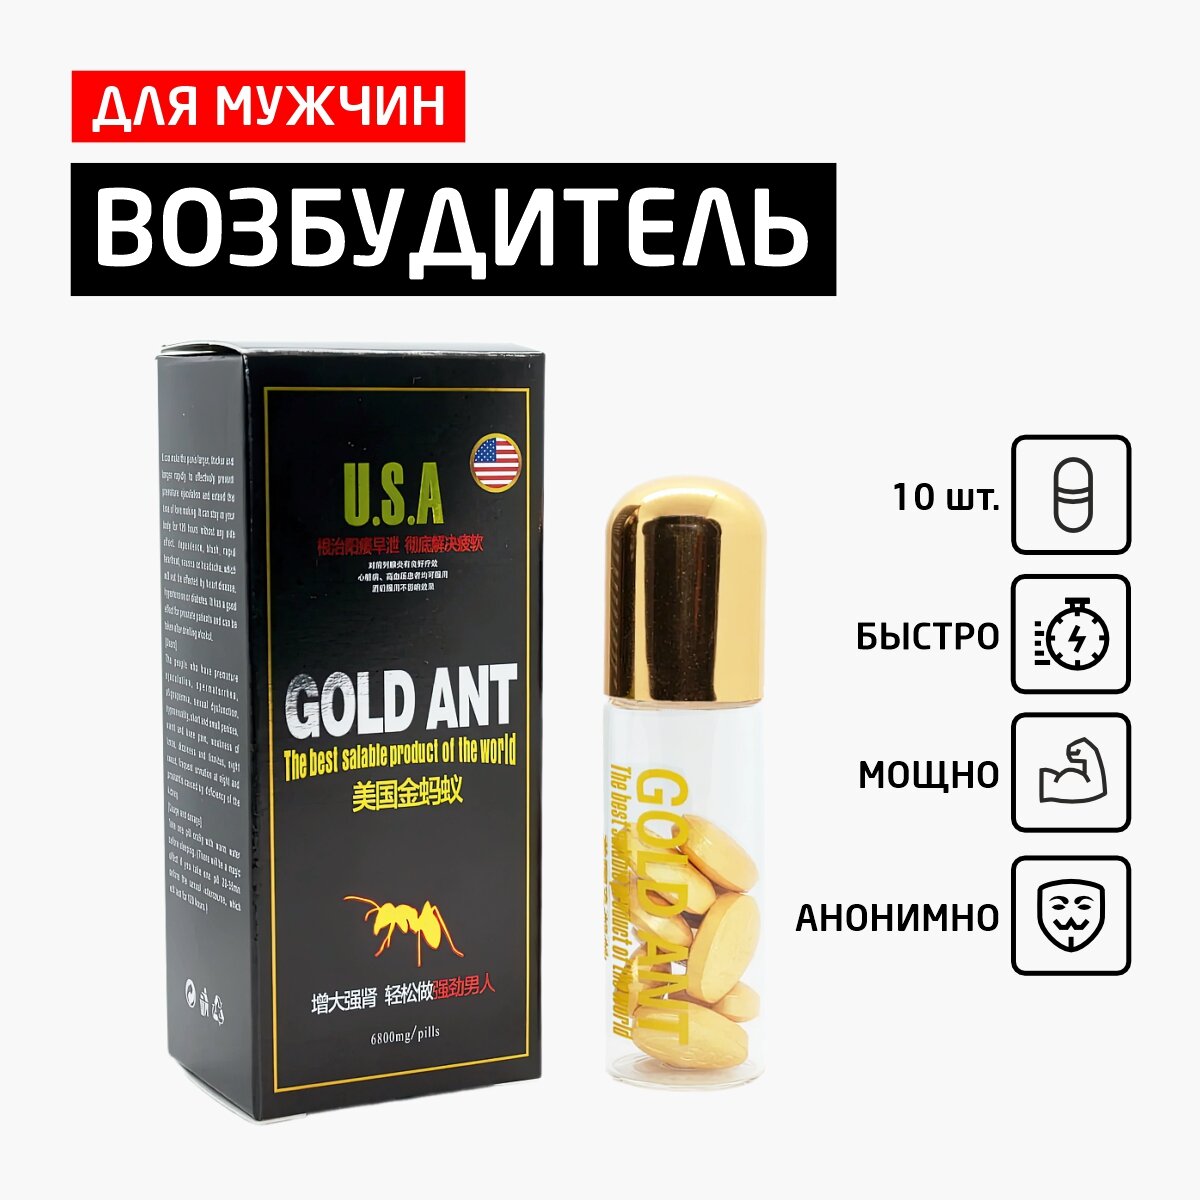 Виагра для мужчин Золотой Муравей, GOLD ANT стимулятор для мужчин, для потенции, 10 таблеток